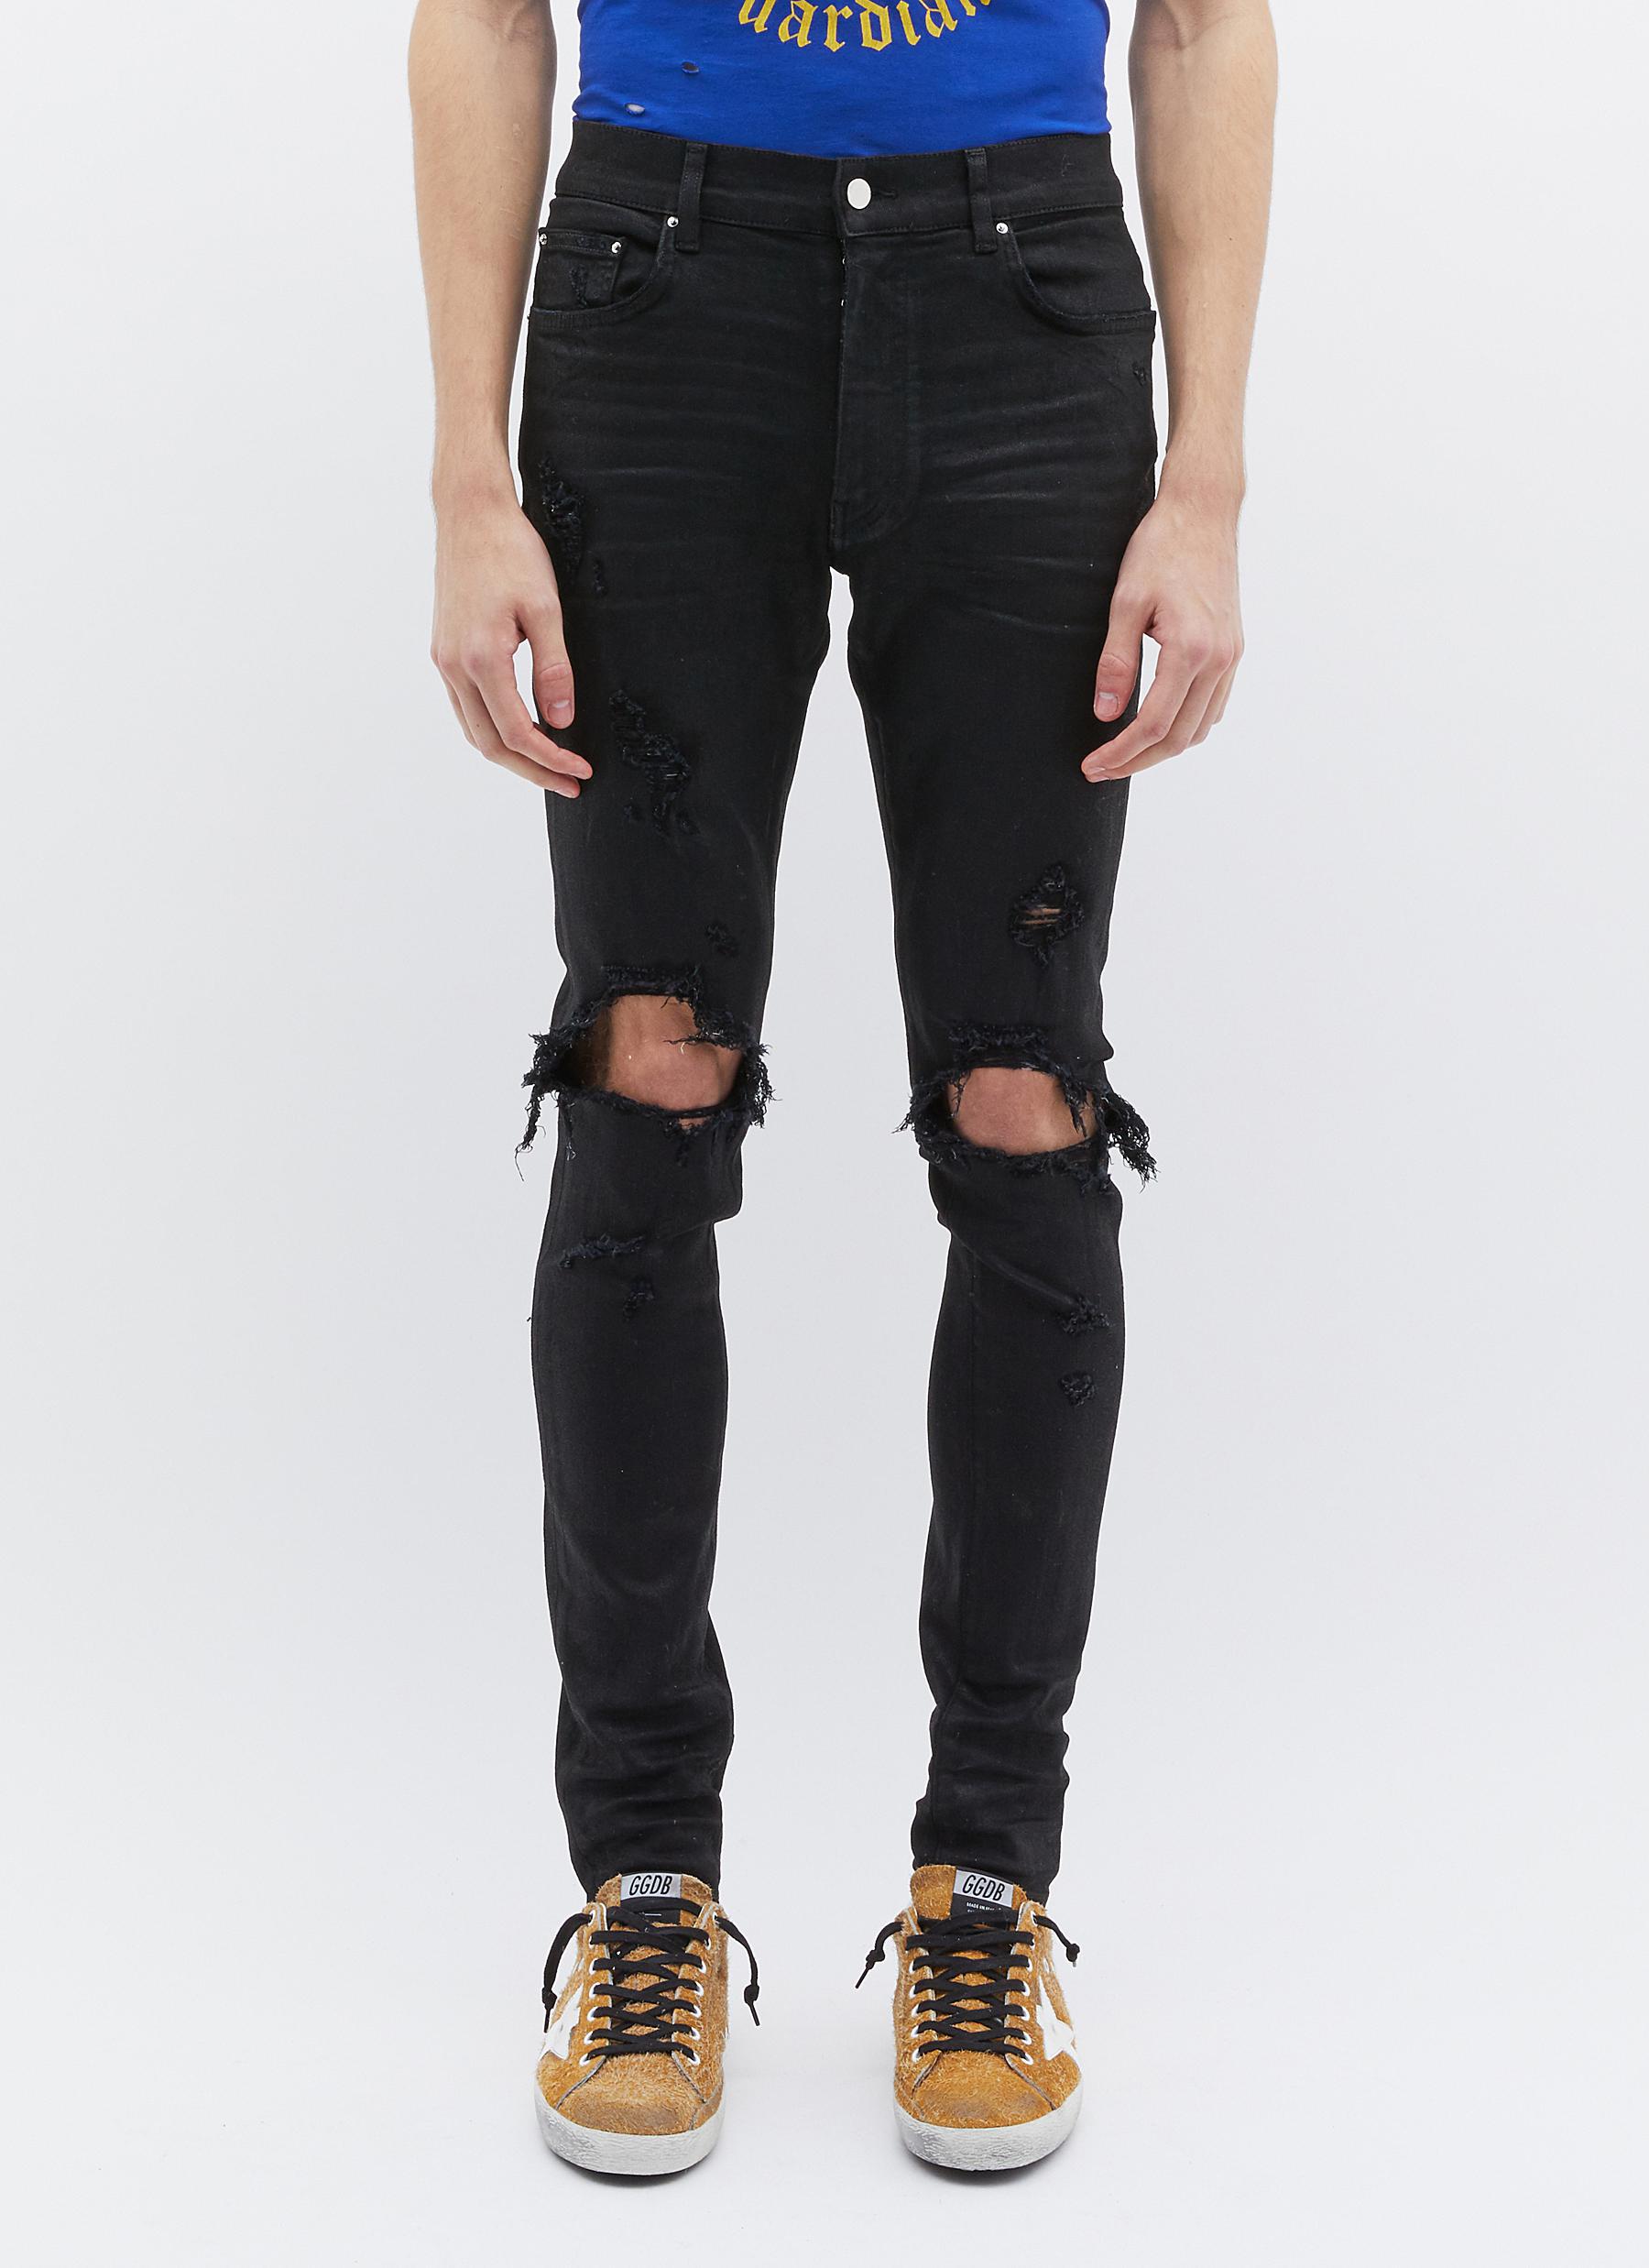 Amiri Denim 'thrasher' Ripped Slim Fit Jeans in Black for Men - Lyst